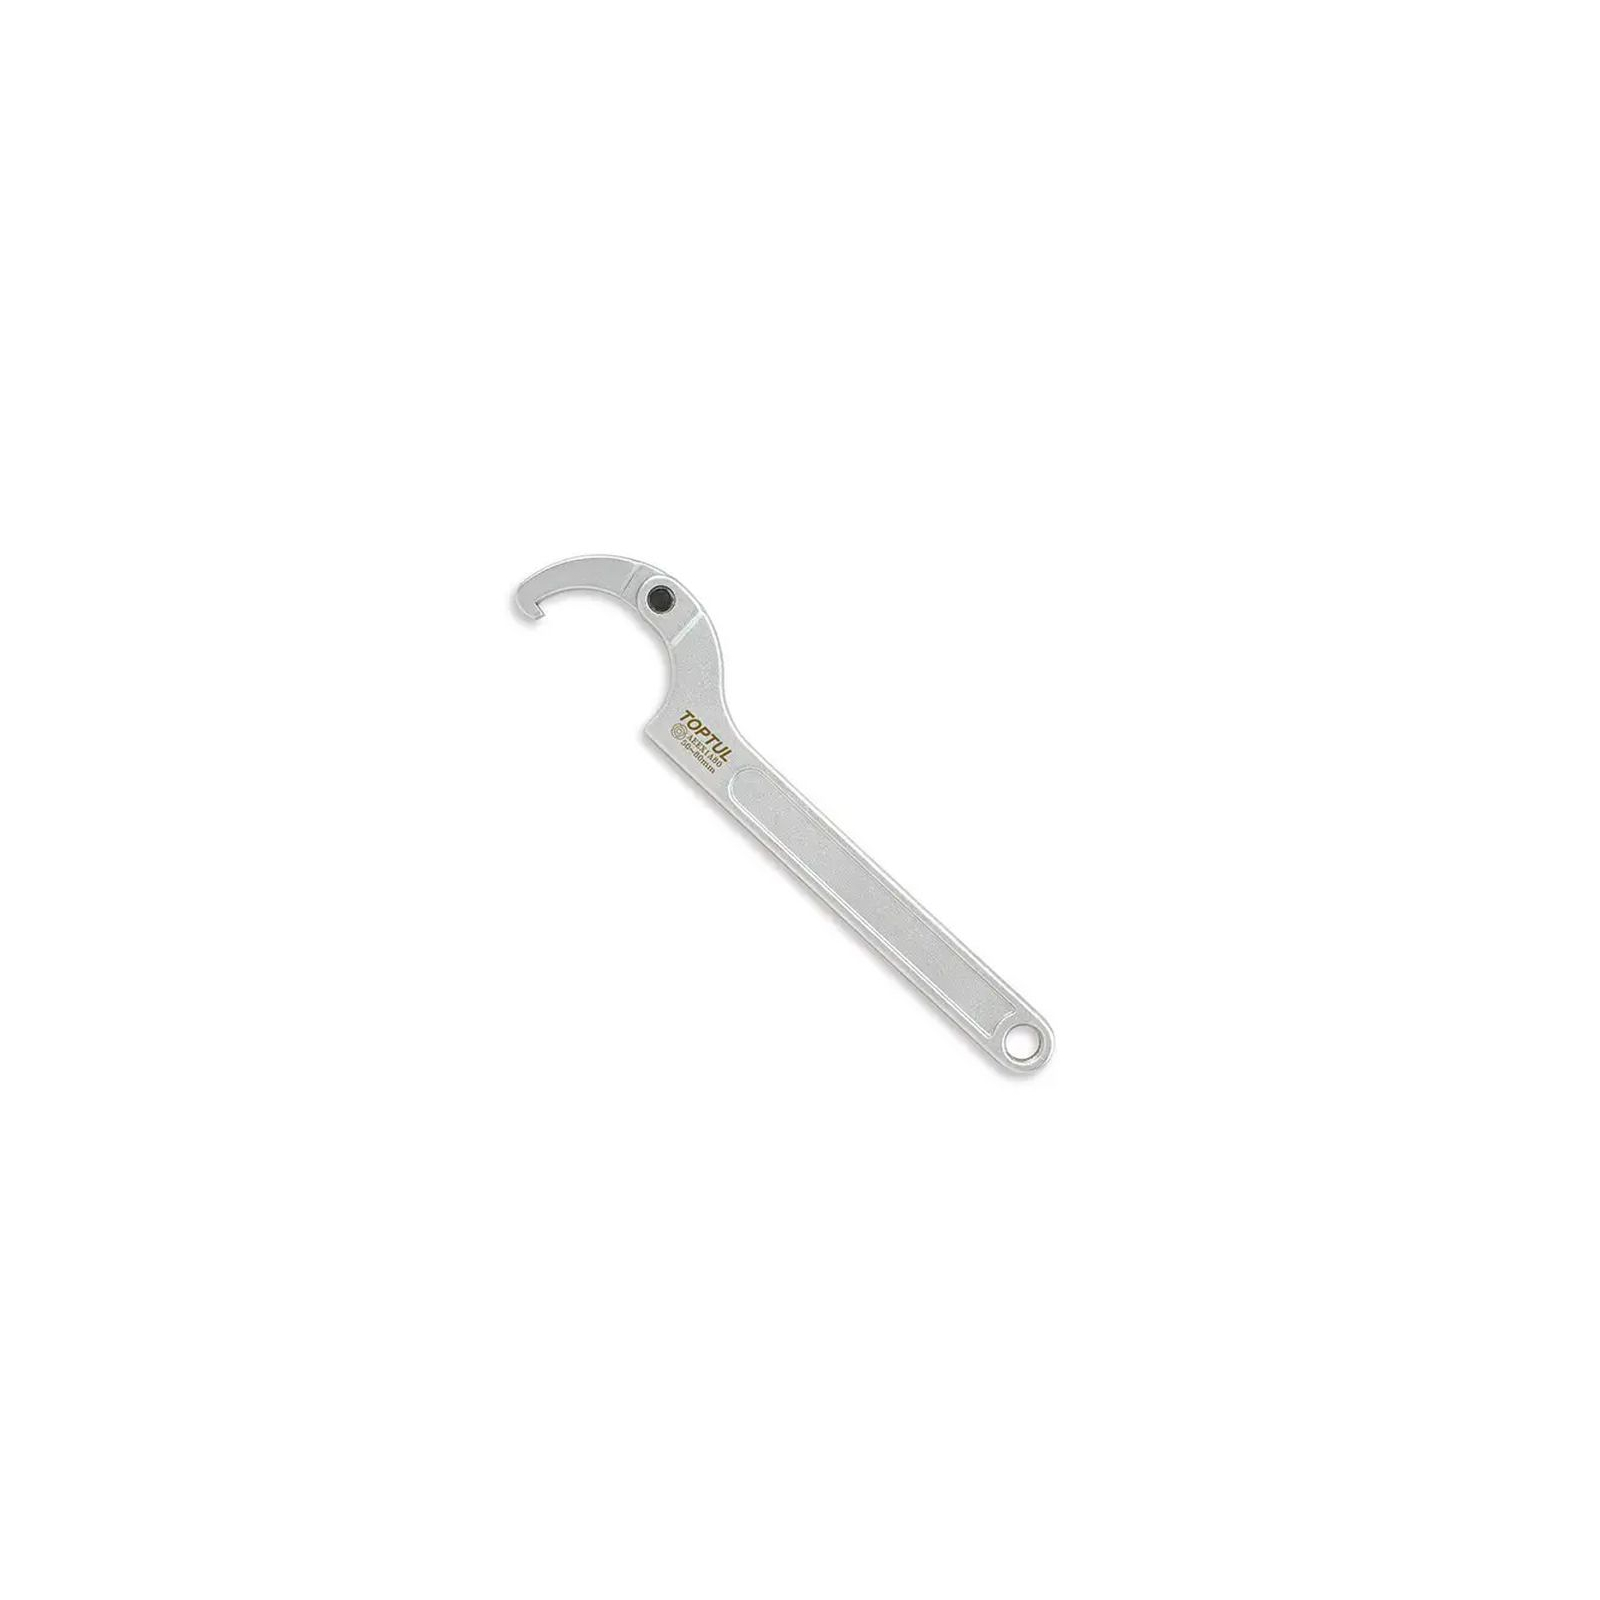 Ключ Toptul серповидный шарнирный для шлицевых гаек 80-120мм (AEEX1AA2)